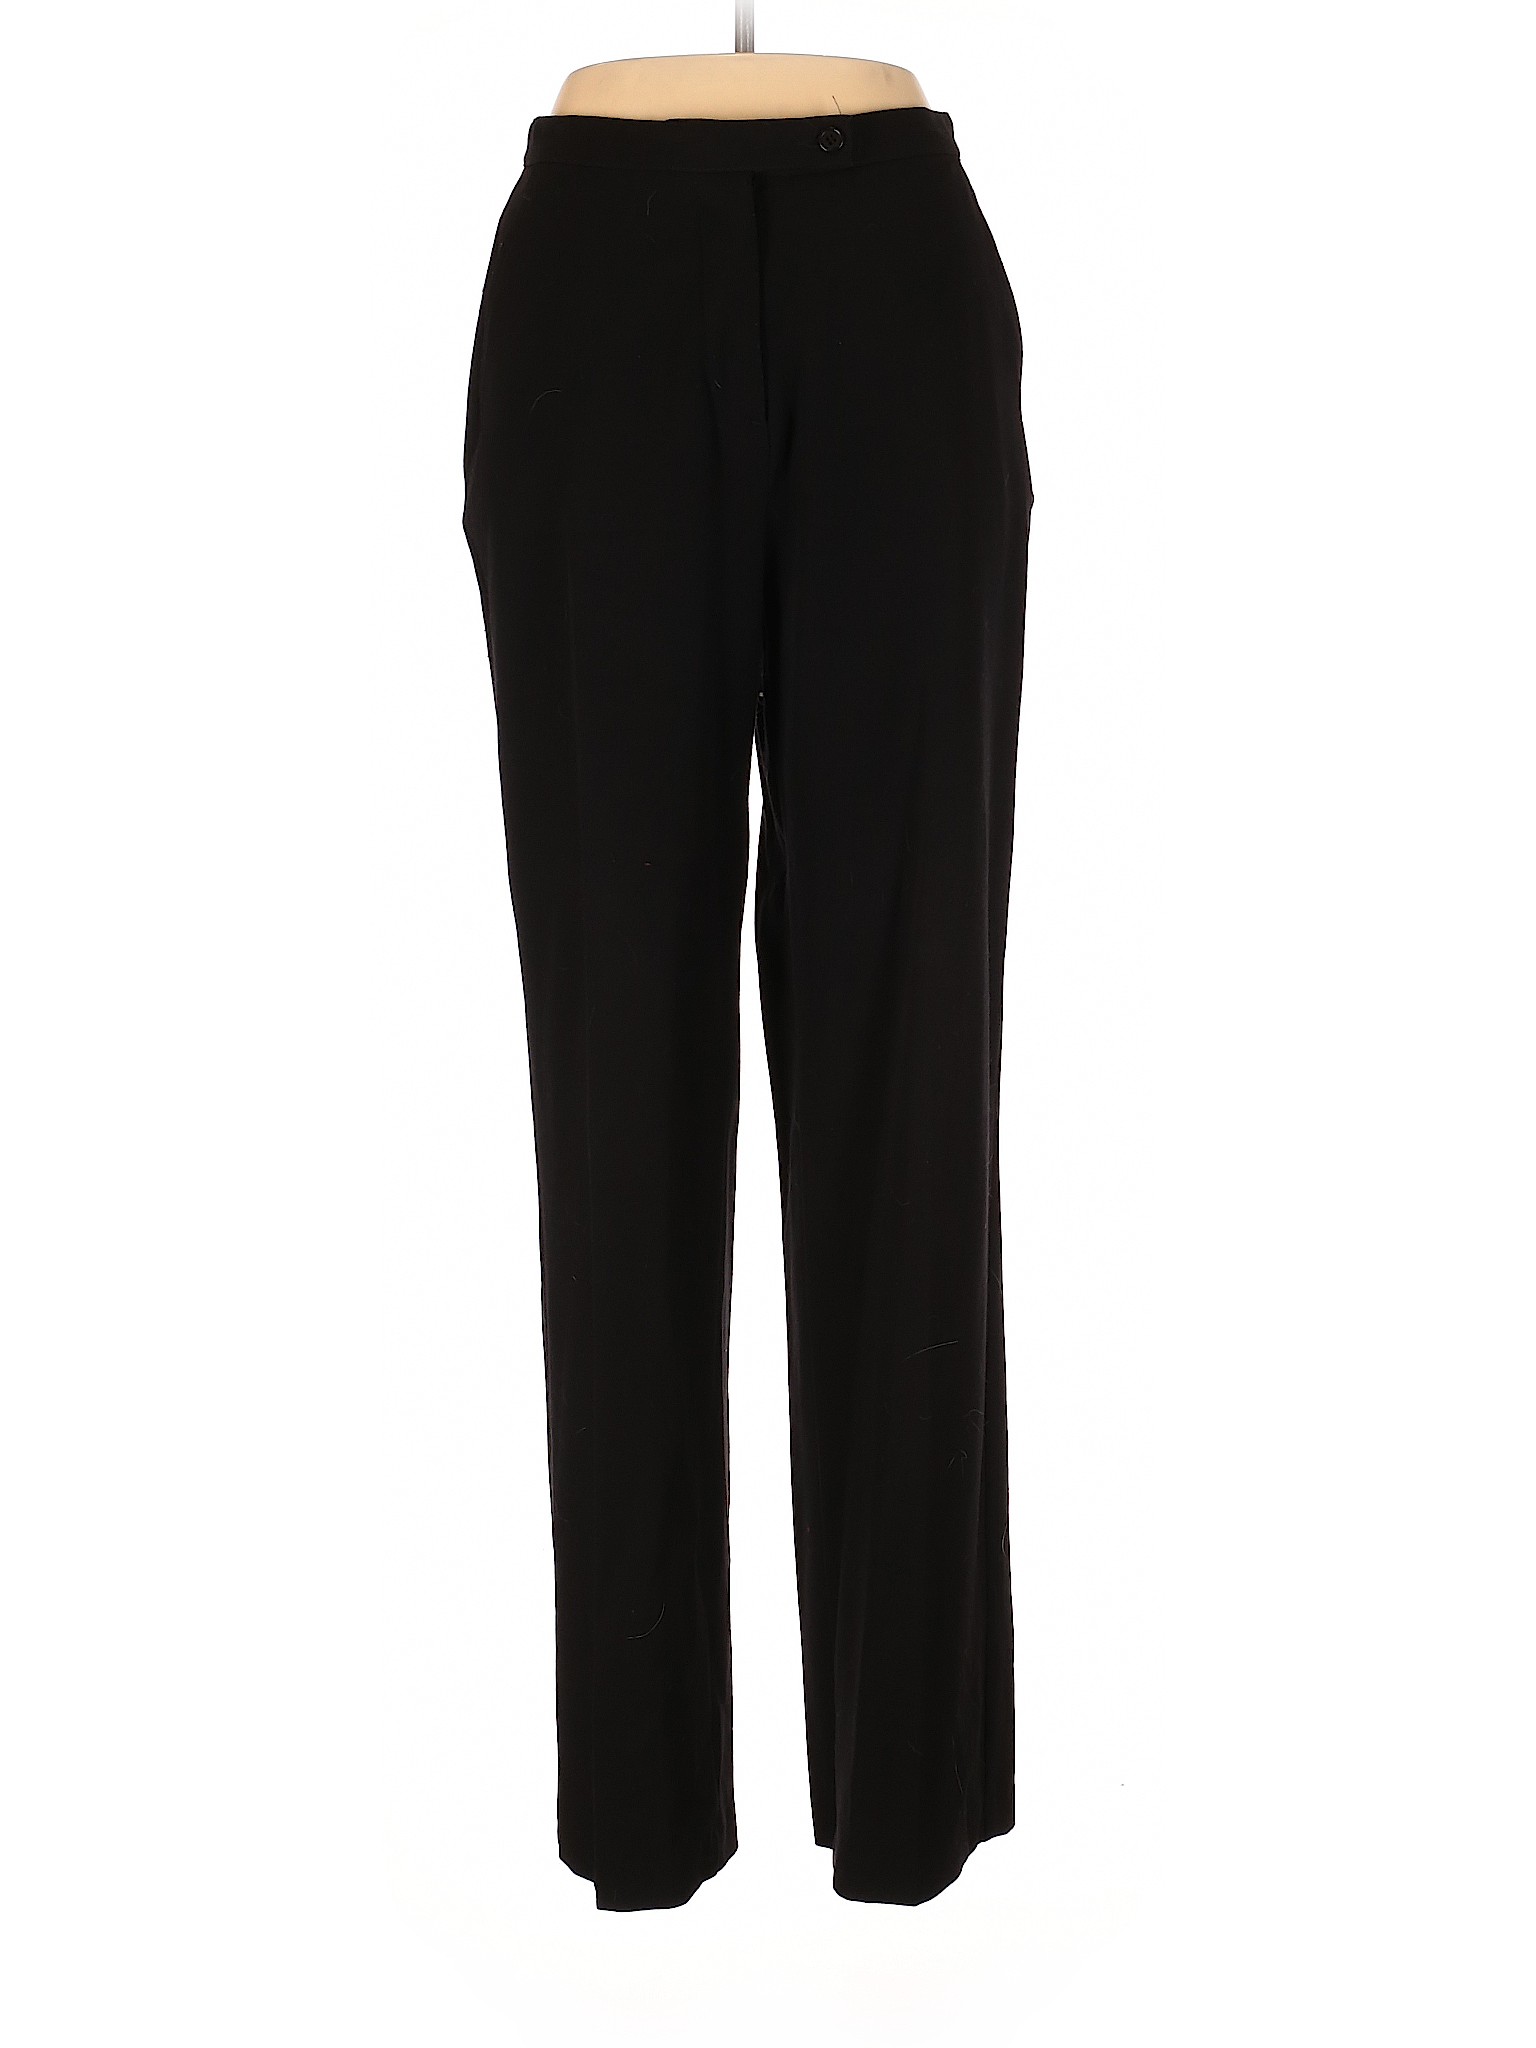 Investments Women Black Dress Pants 10 | eBay